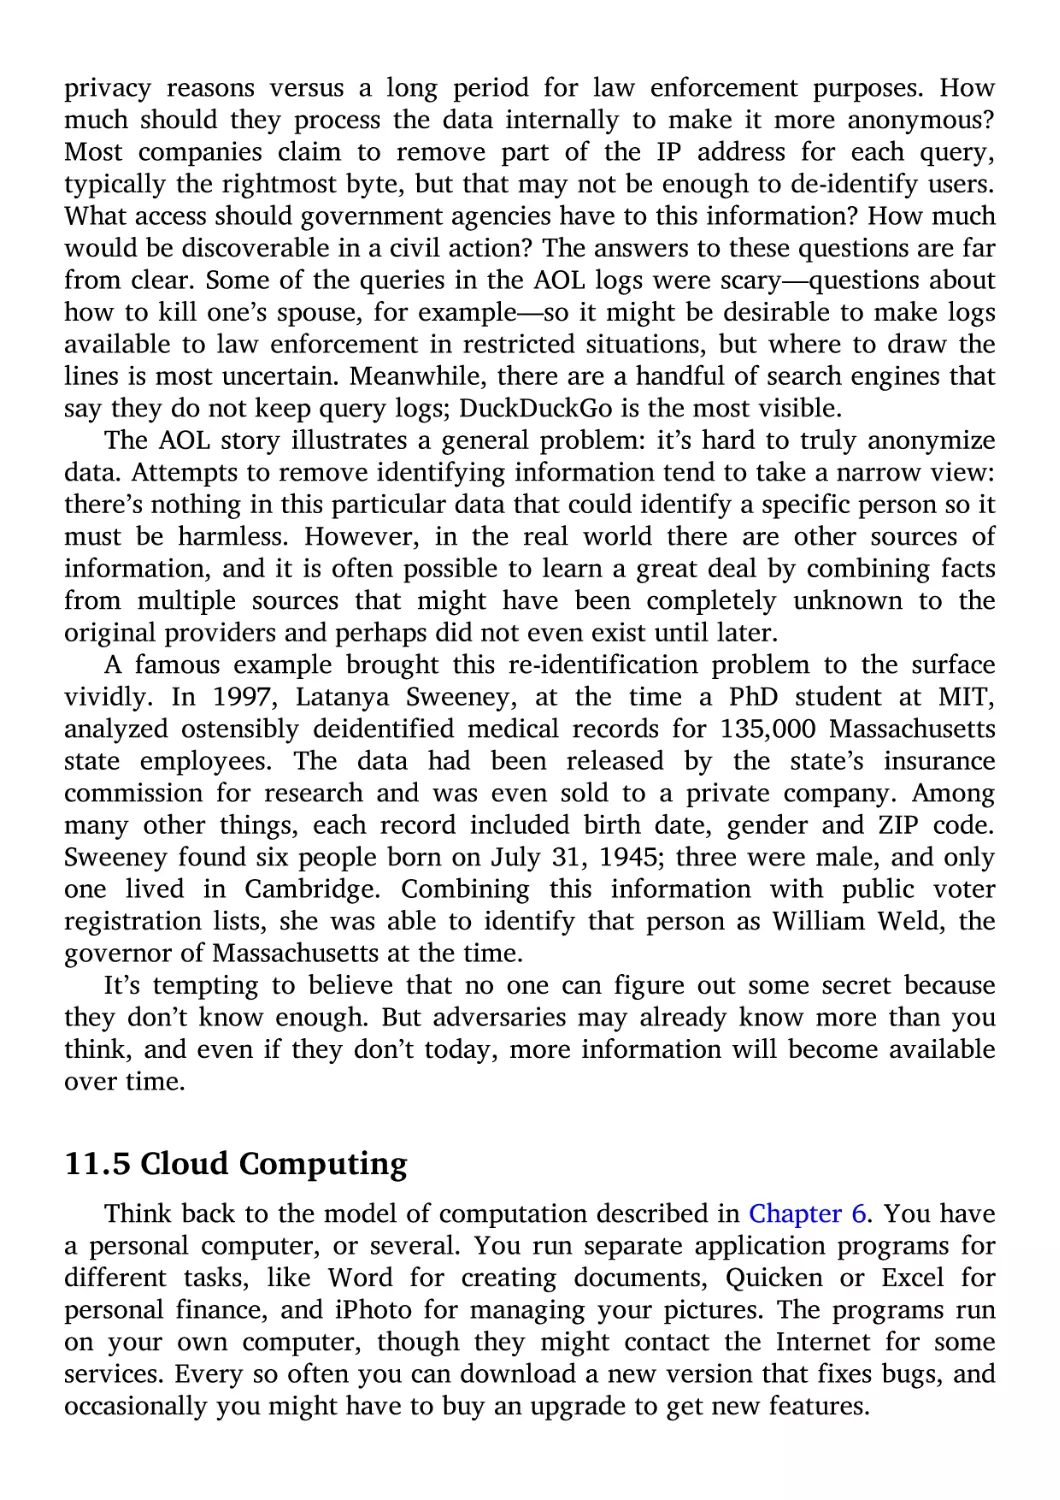 11.5 Cloud Computing